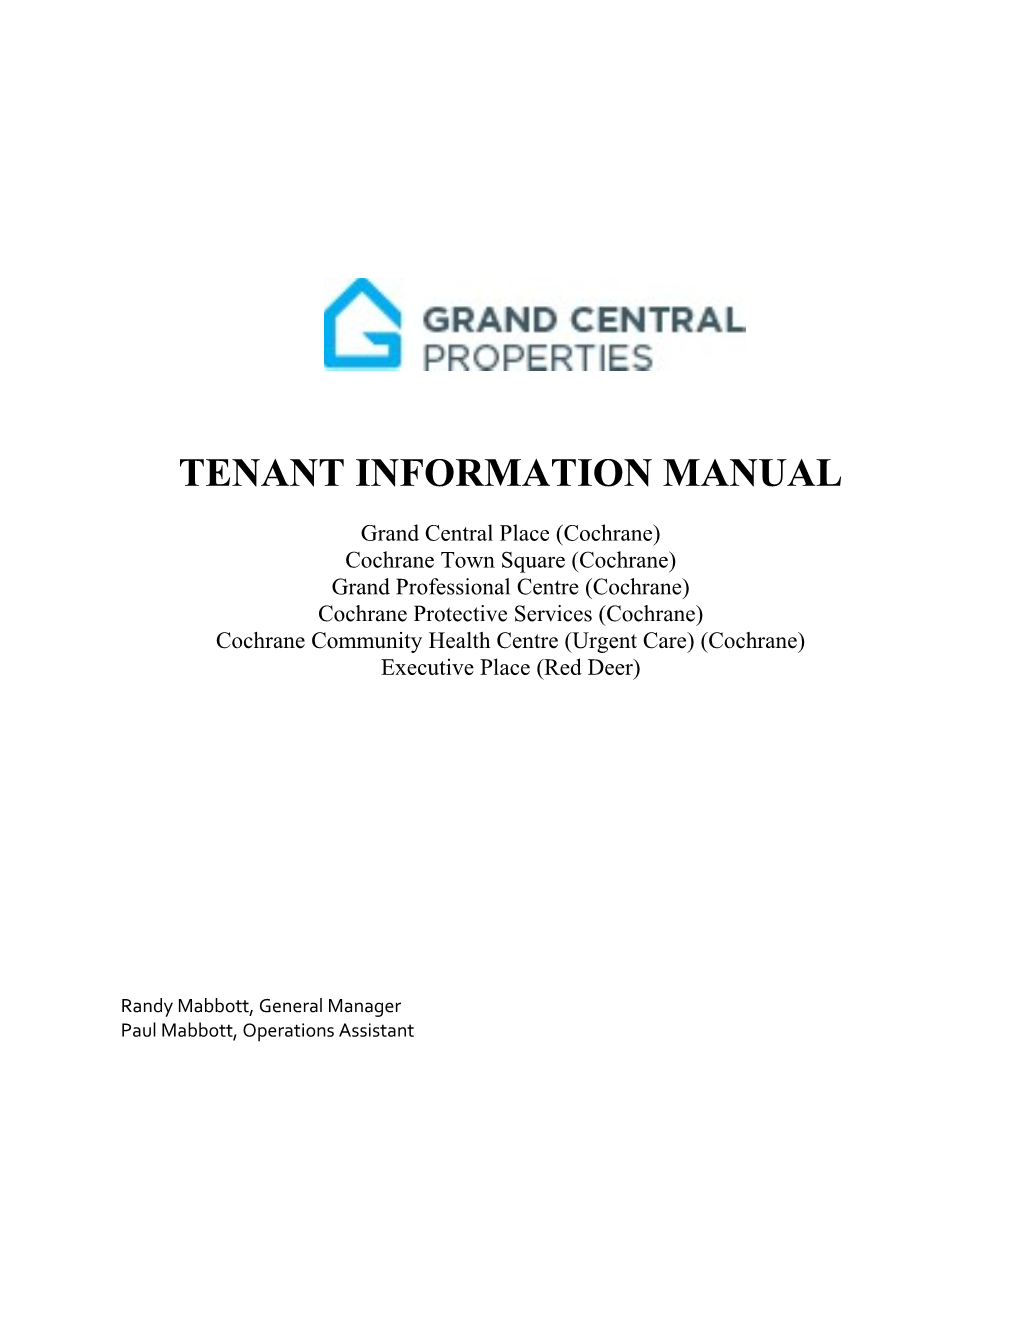 Tenant Information Manual